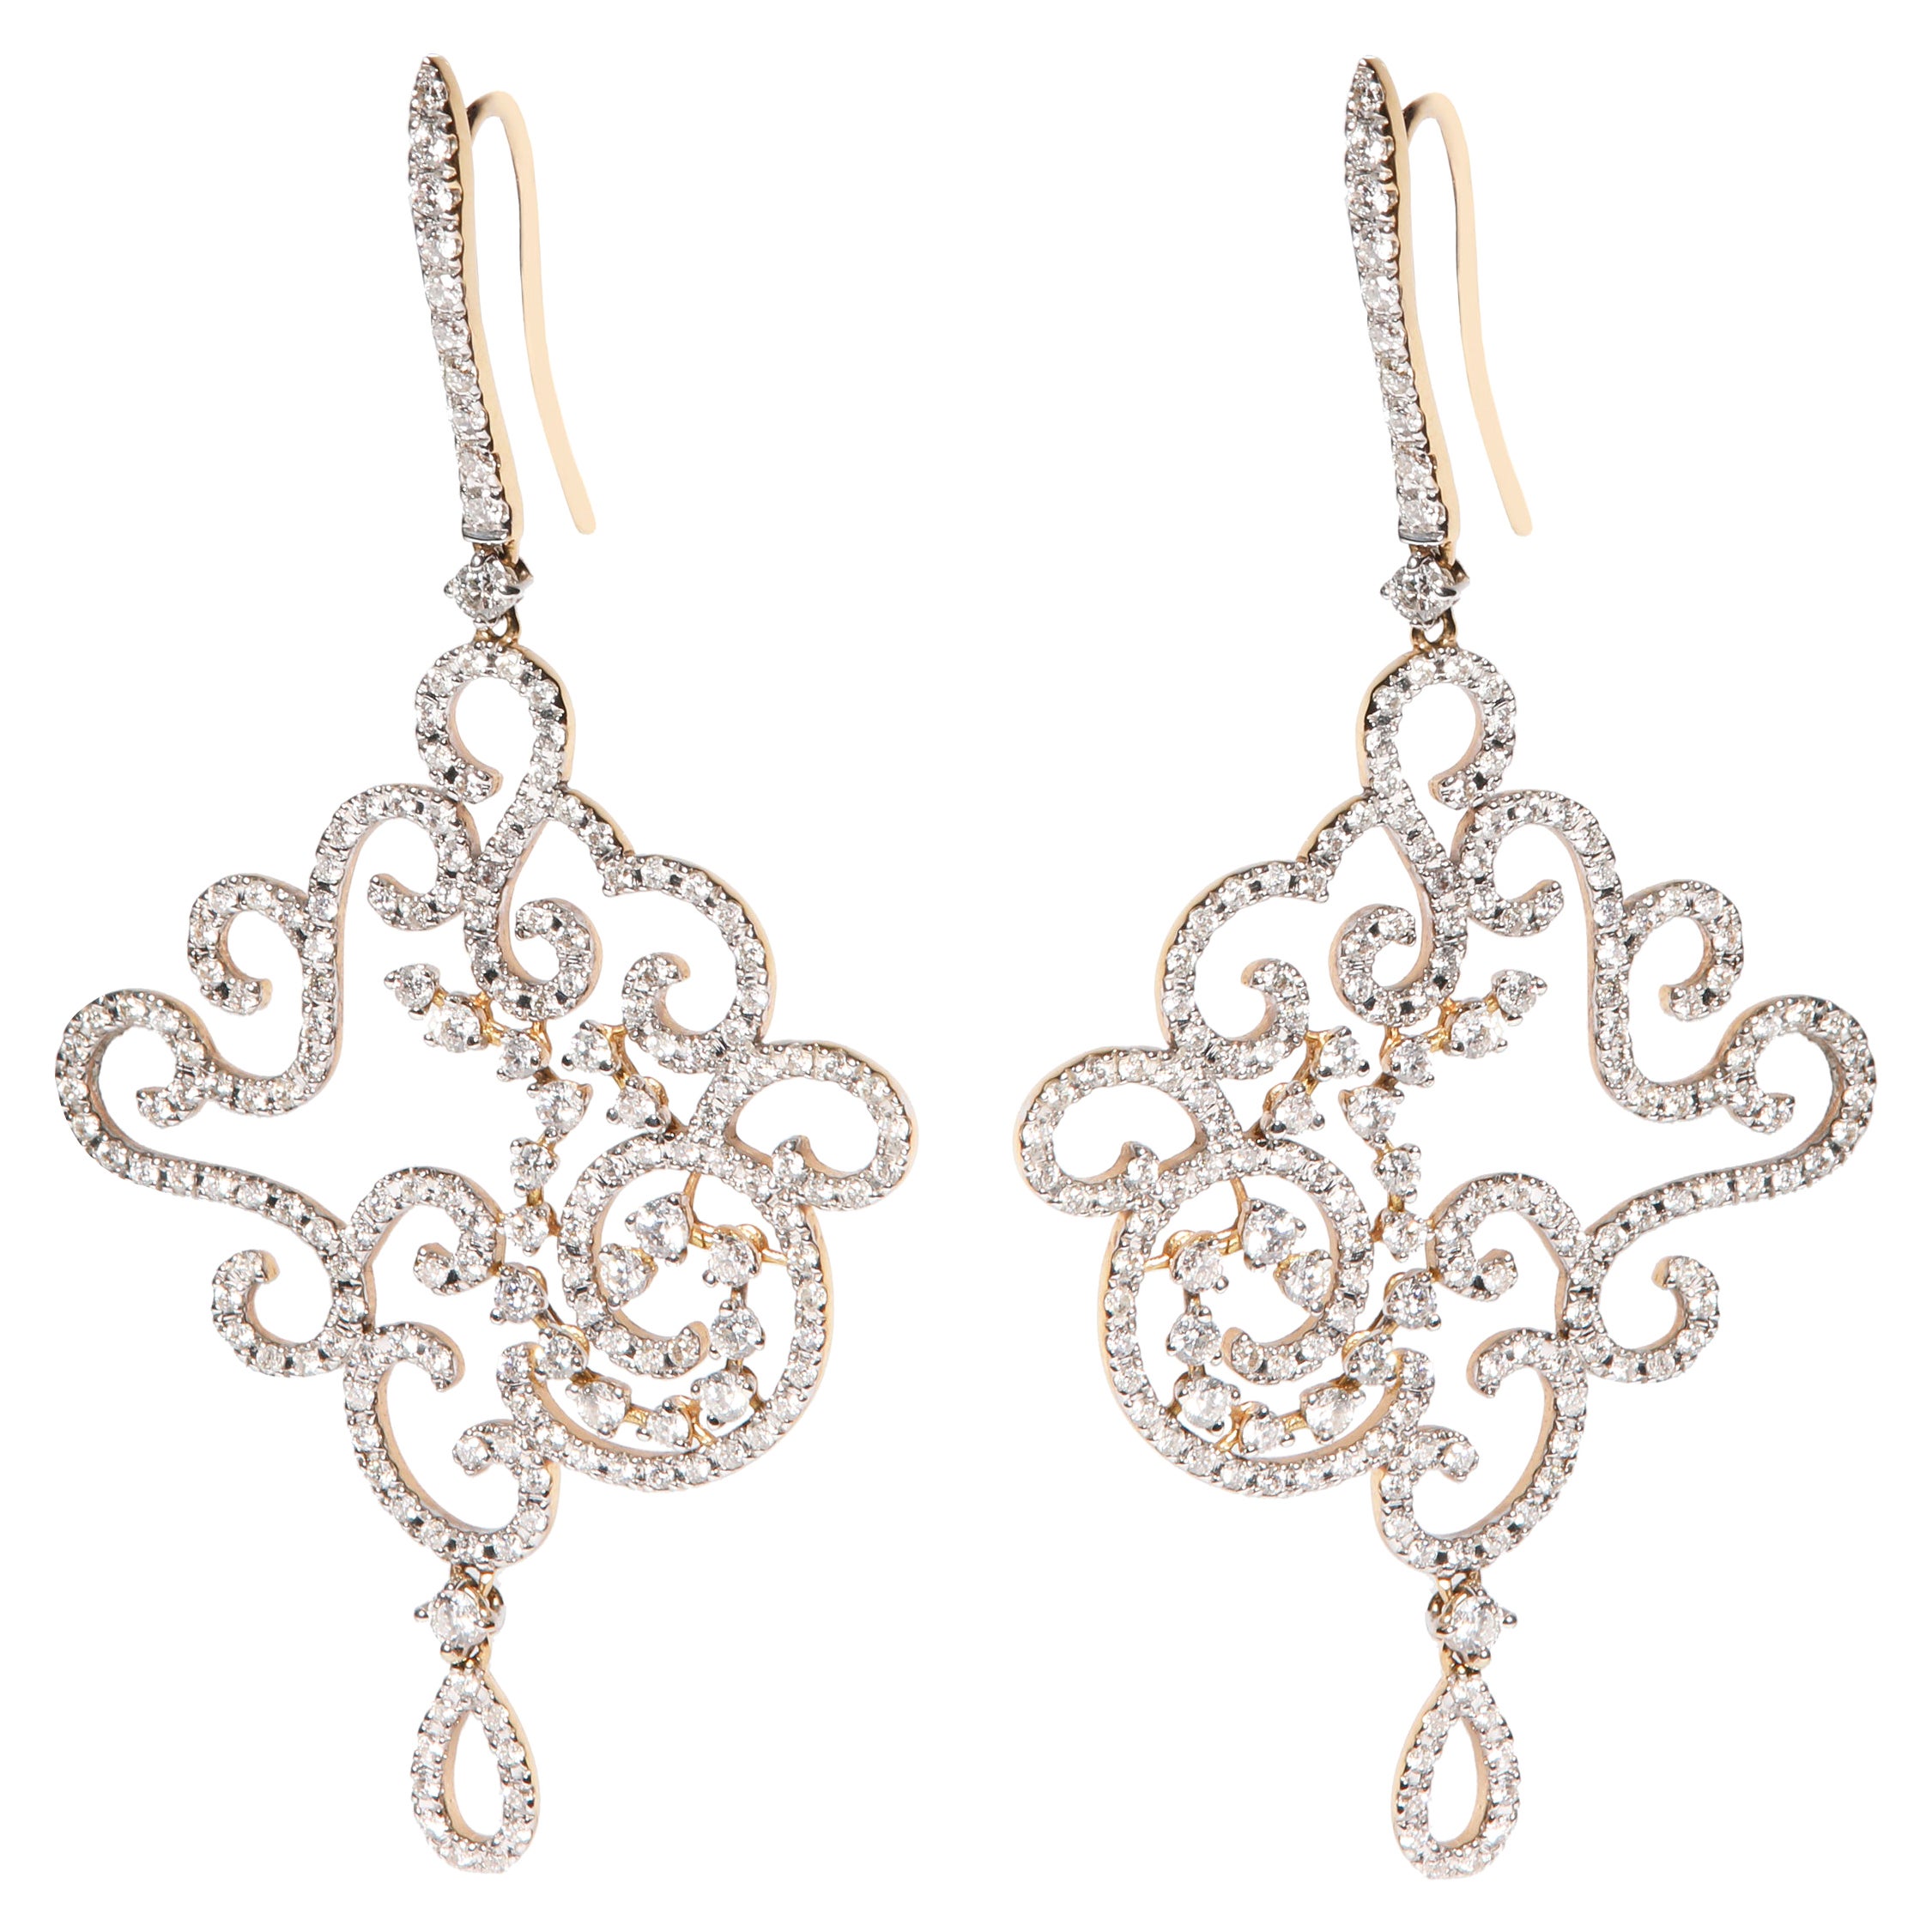 Casato Gioielli 18 Karat Gold Lace Earrings Set with Diamonds For Sale